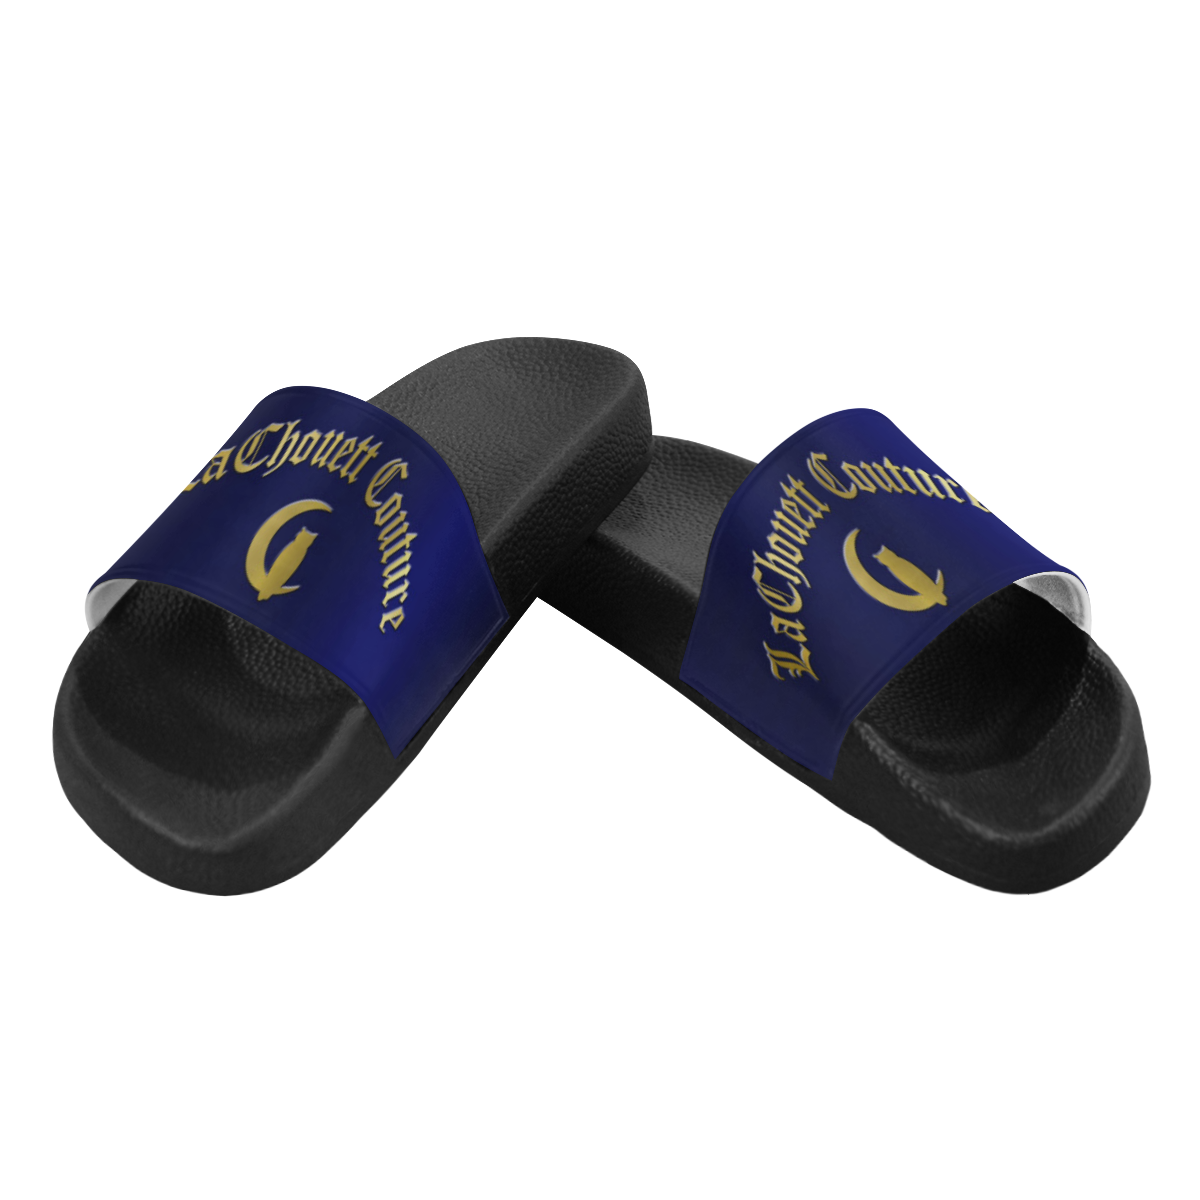 LaChouett G Luxury Women's Slide Sandals (Model 057)